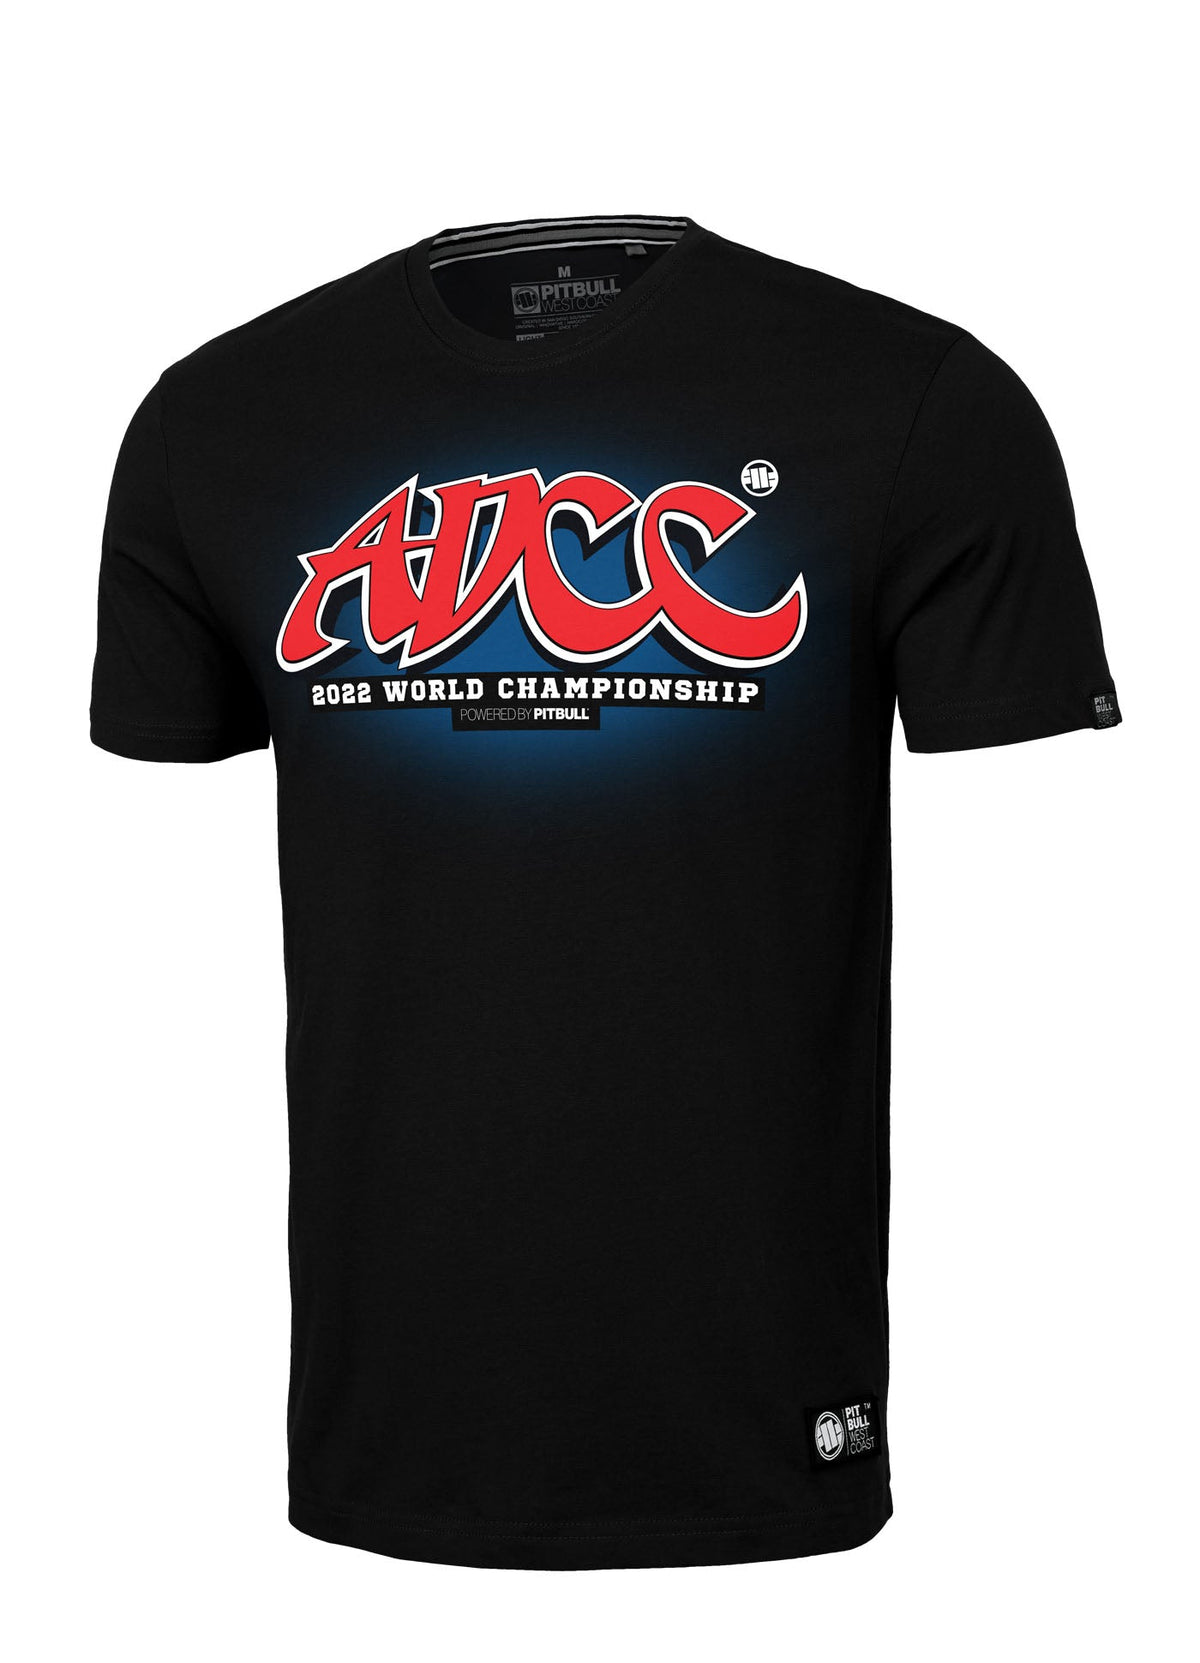 ADCC CHAMPIONSHIP 2022 NEVADA Black T-shirt